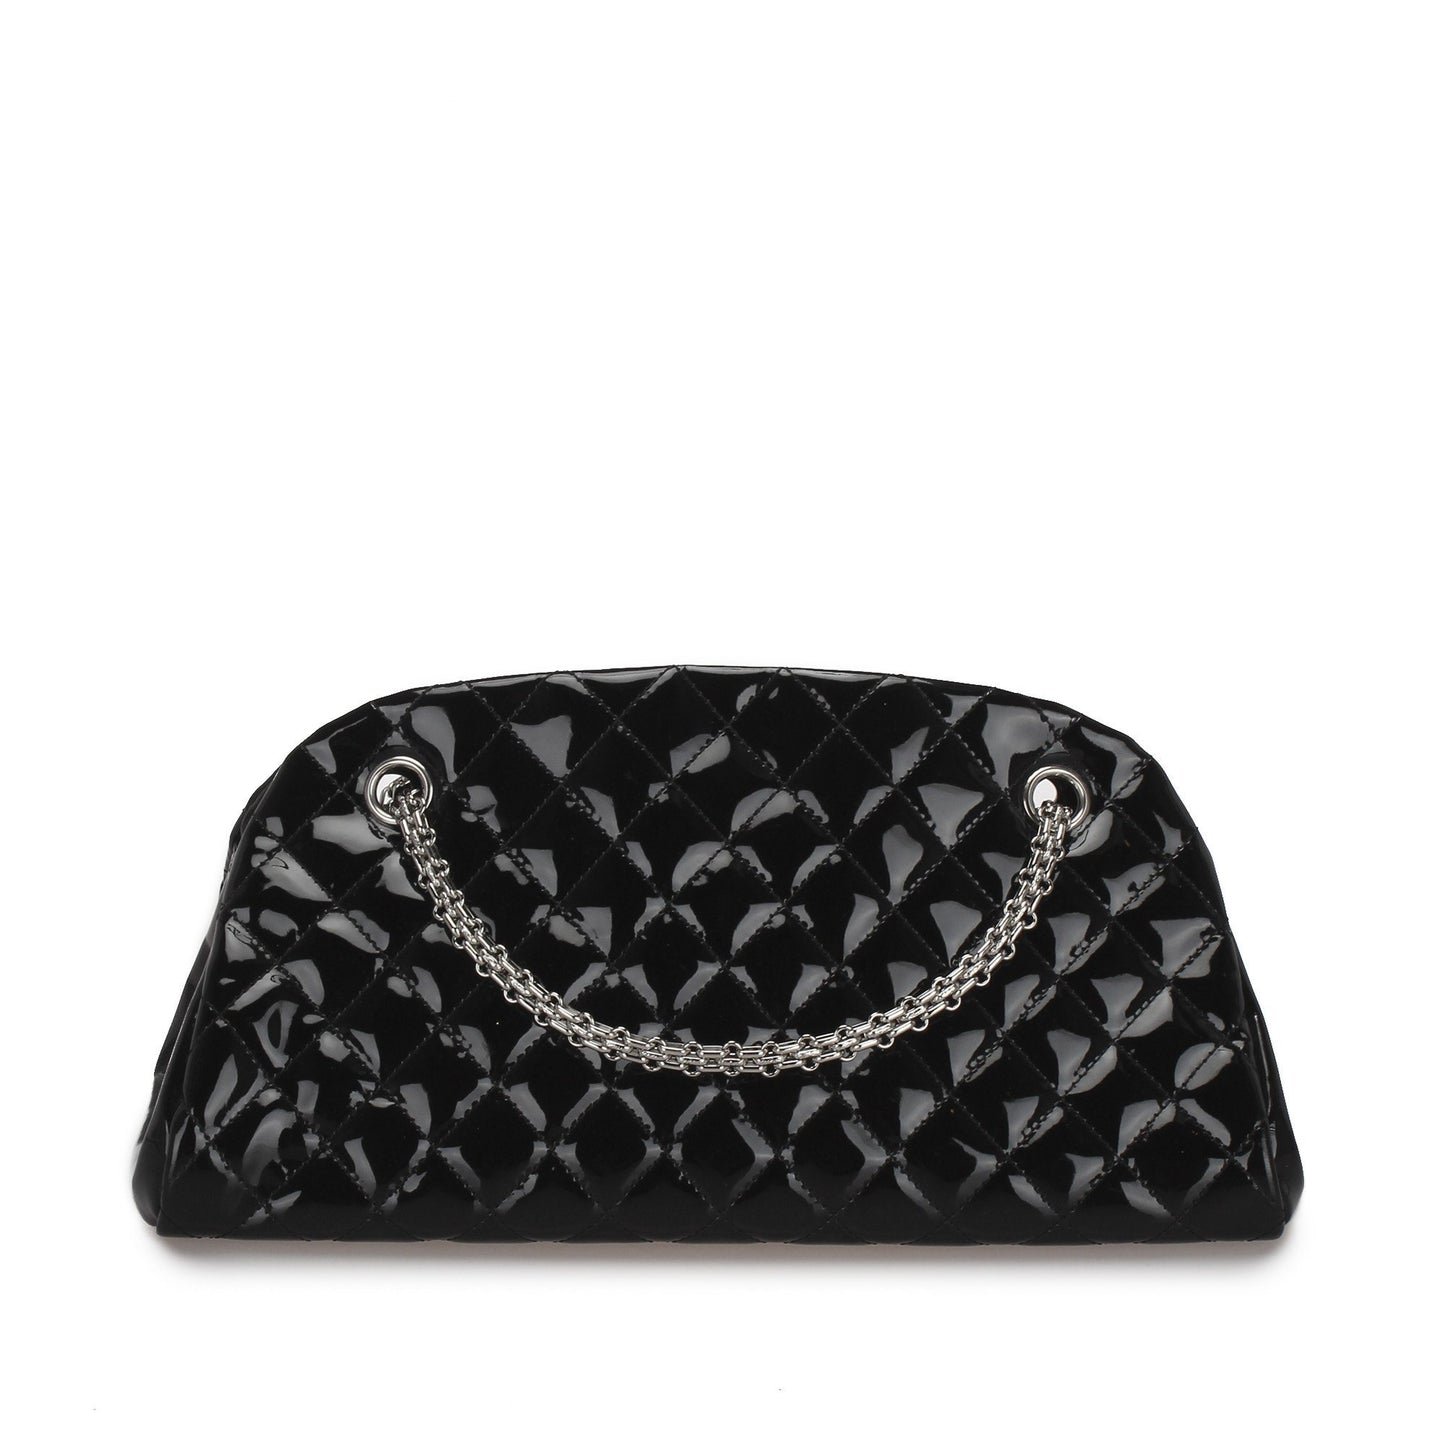 Chanel Black Mademoiselle Bowling Bag Bags Chanel 